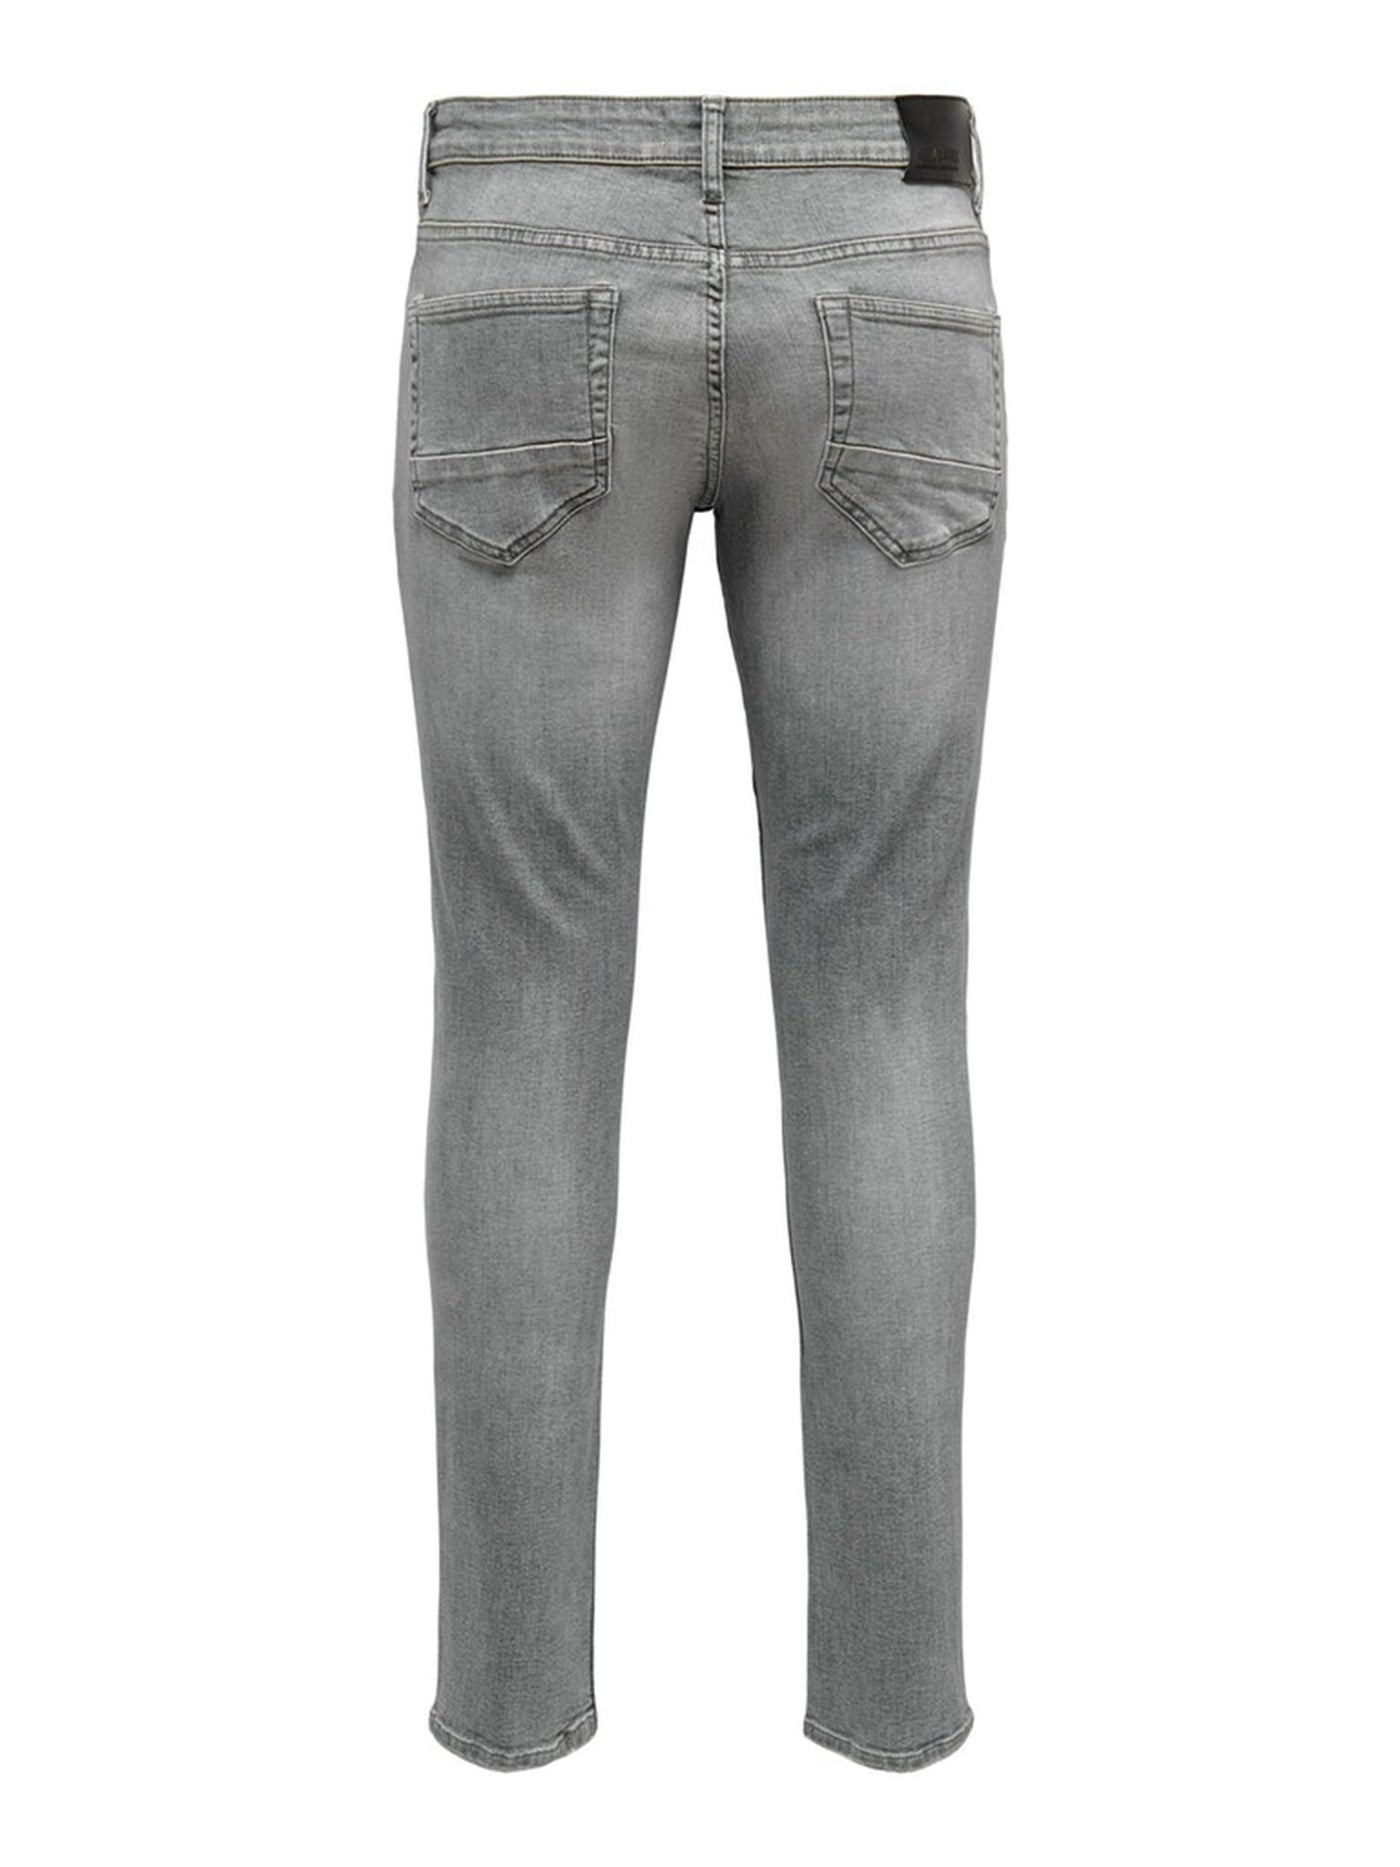 Loom Slim Grey Jeans - Grey - Only & Sons - Grey 7